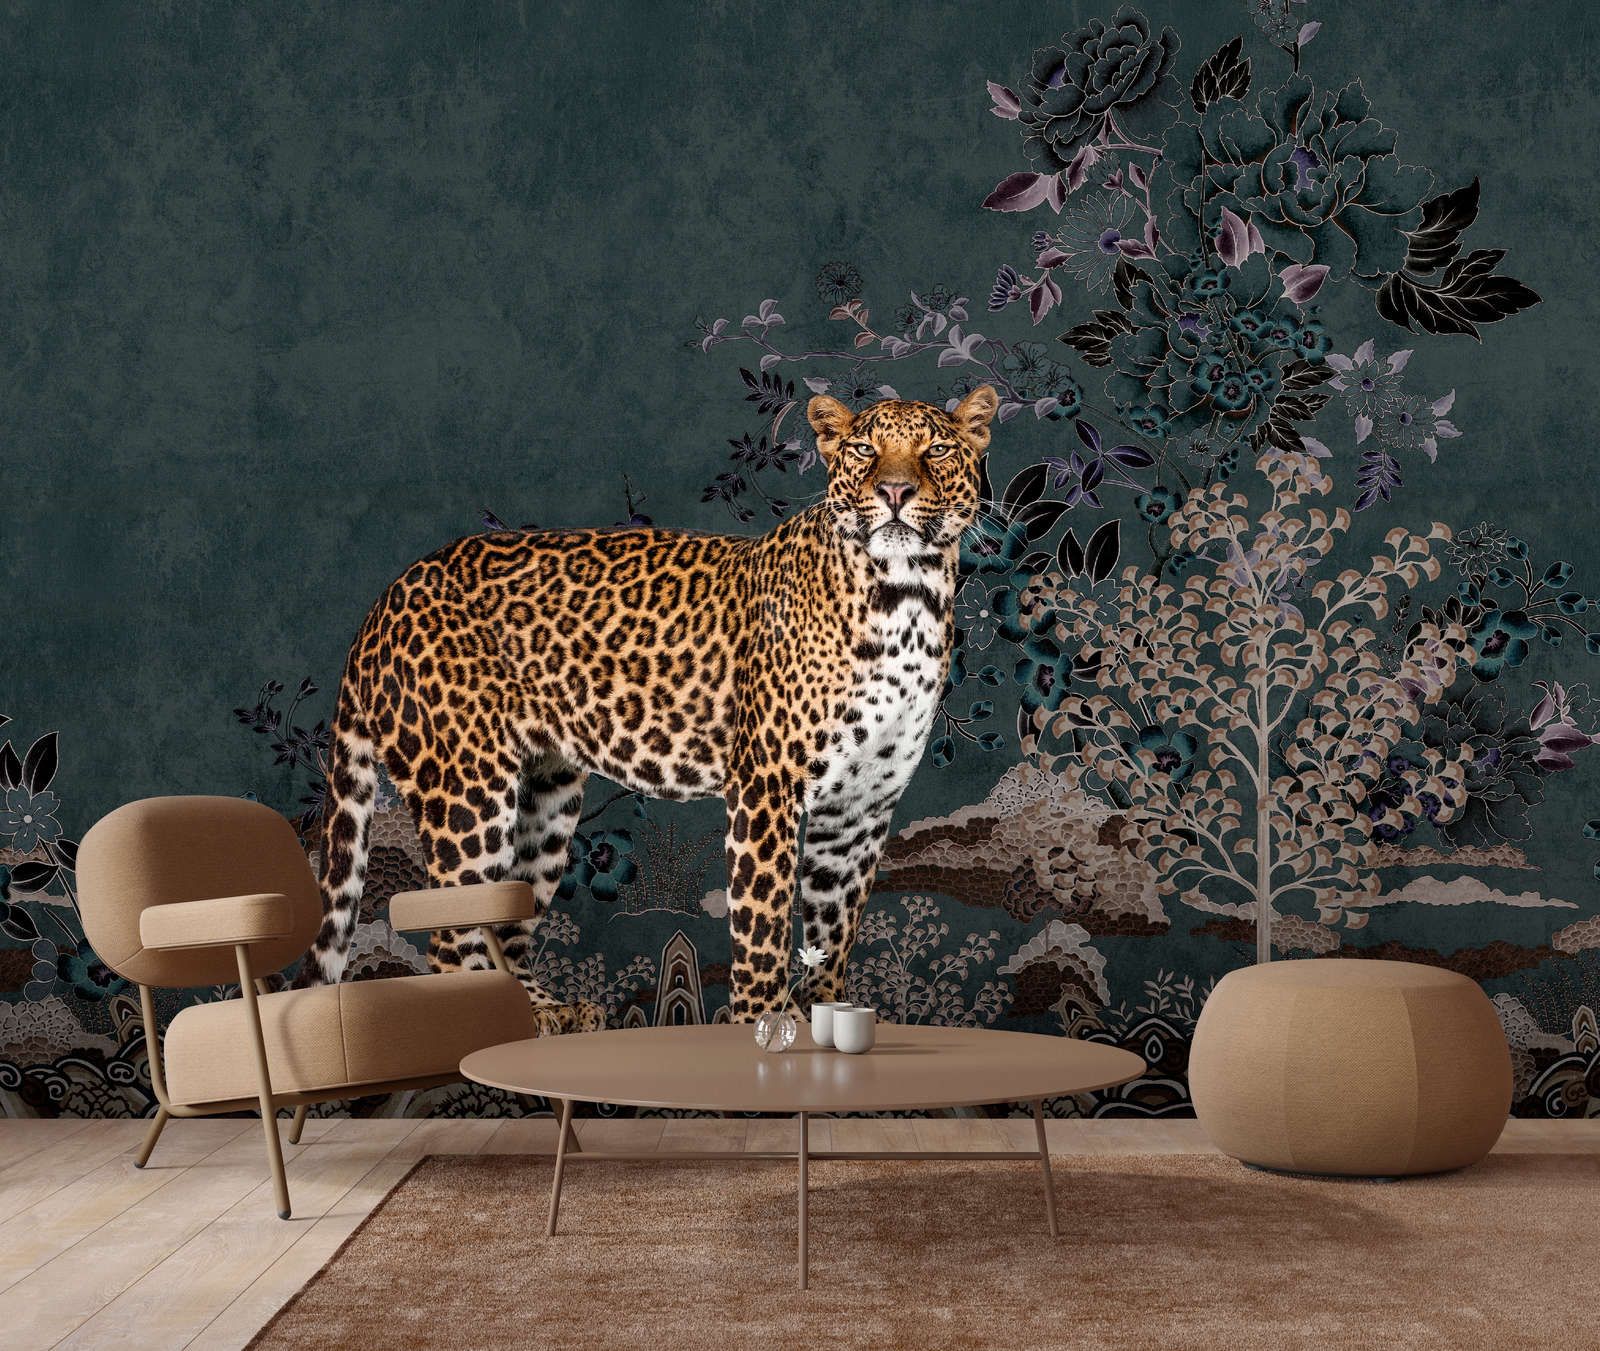             Fototapete »rani« - Abstraktes Jungle-Motiv mit Leopard – Glattes, leicht perlmutt-schimmerndes Vlies
        